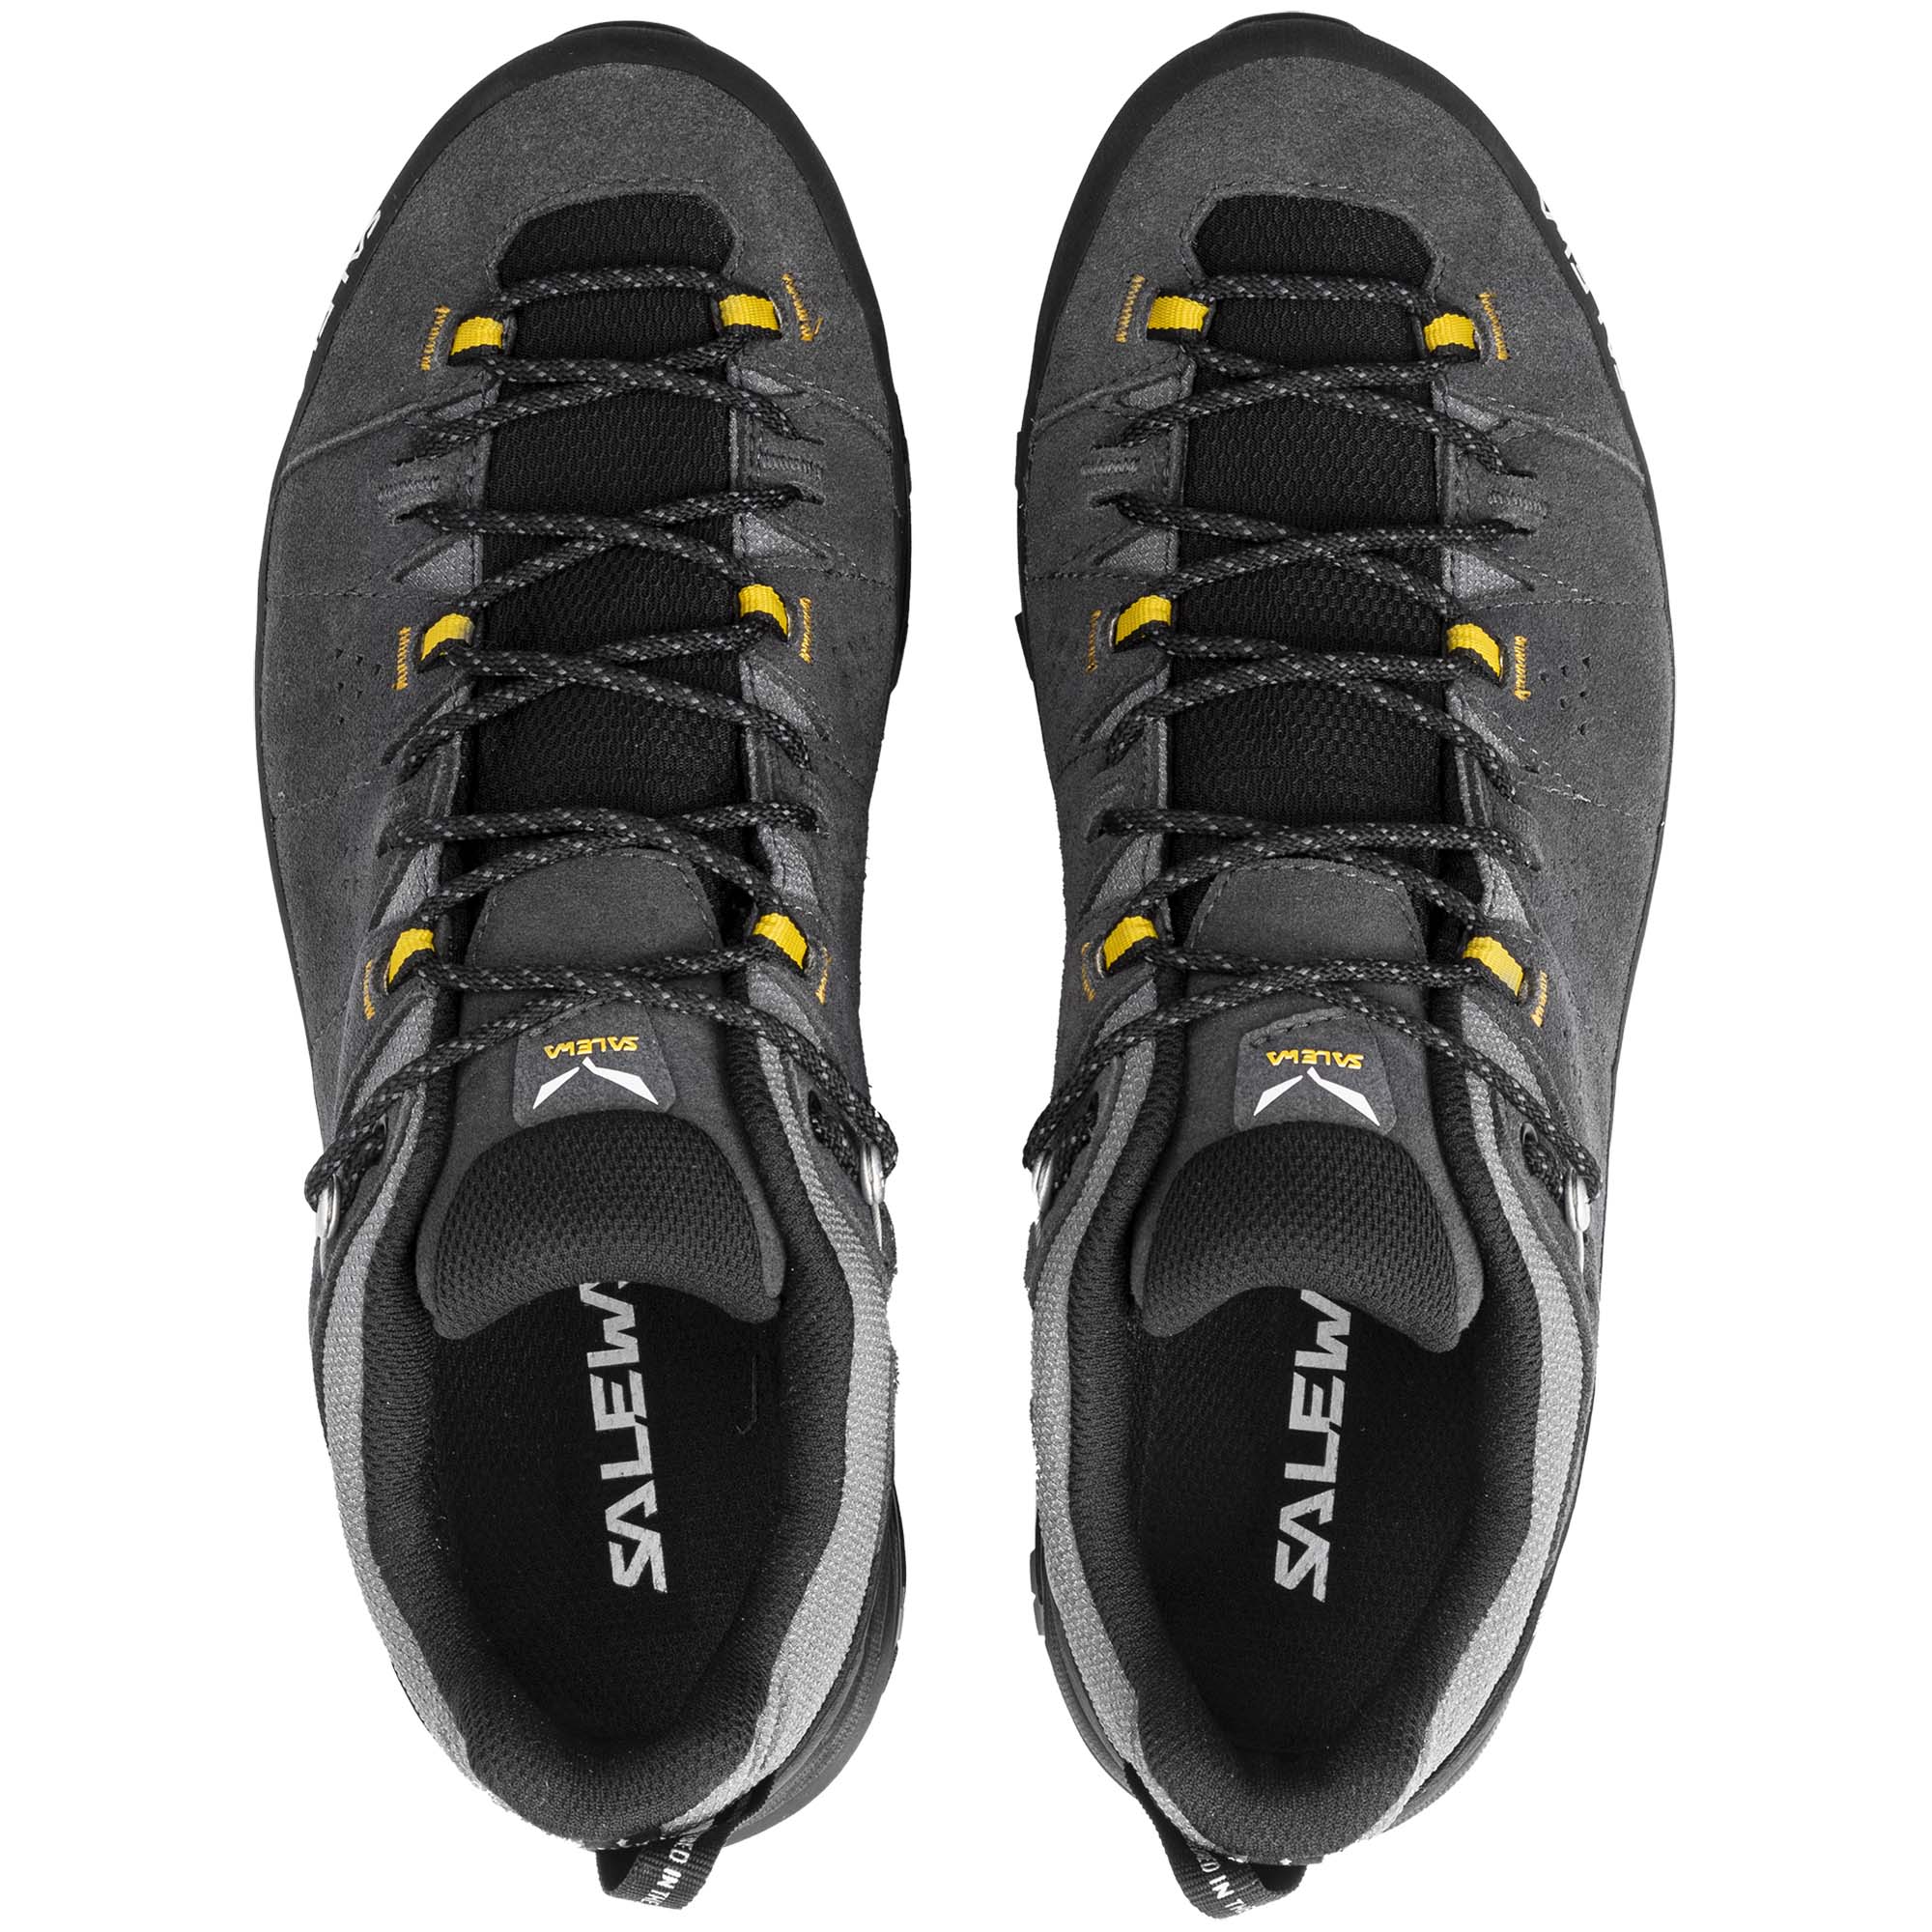 Salewa Alp Trainer 2 GTX Men's Walking Shoes